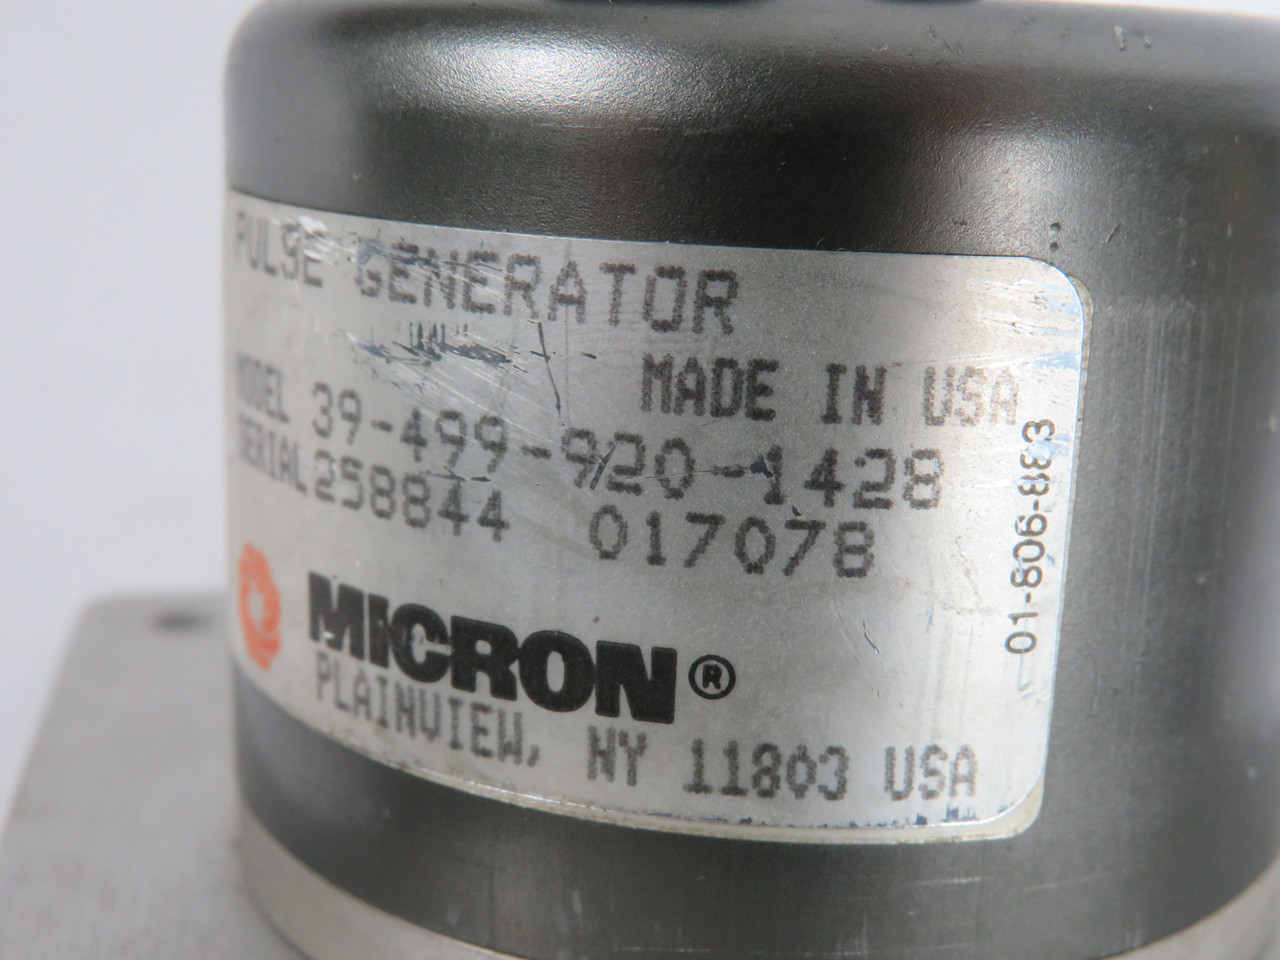 Micron 39-499-920-1428 Rotary Pulse Generator COSMETIC DAMAGE USED